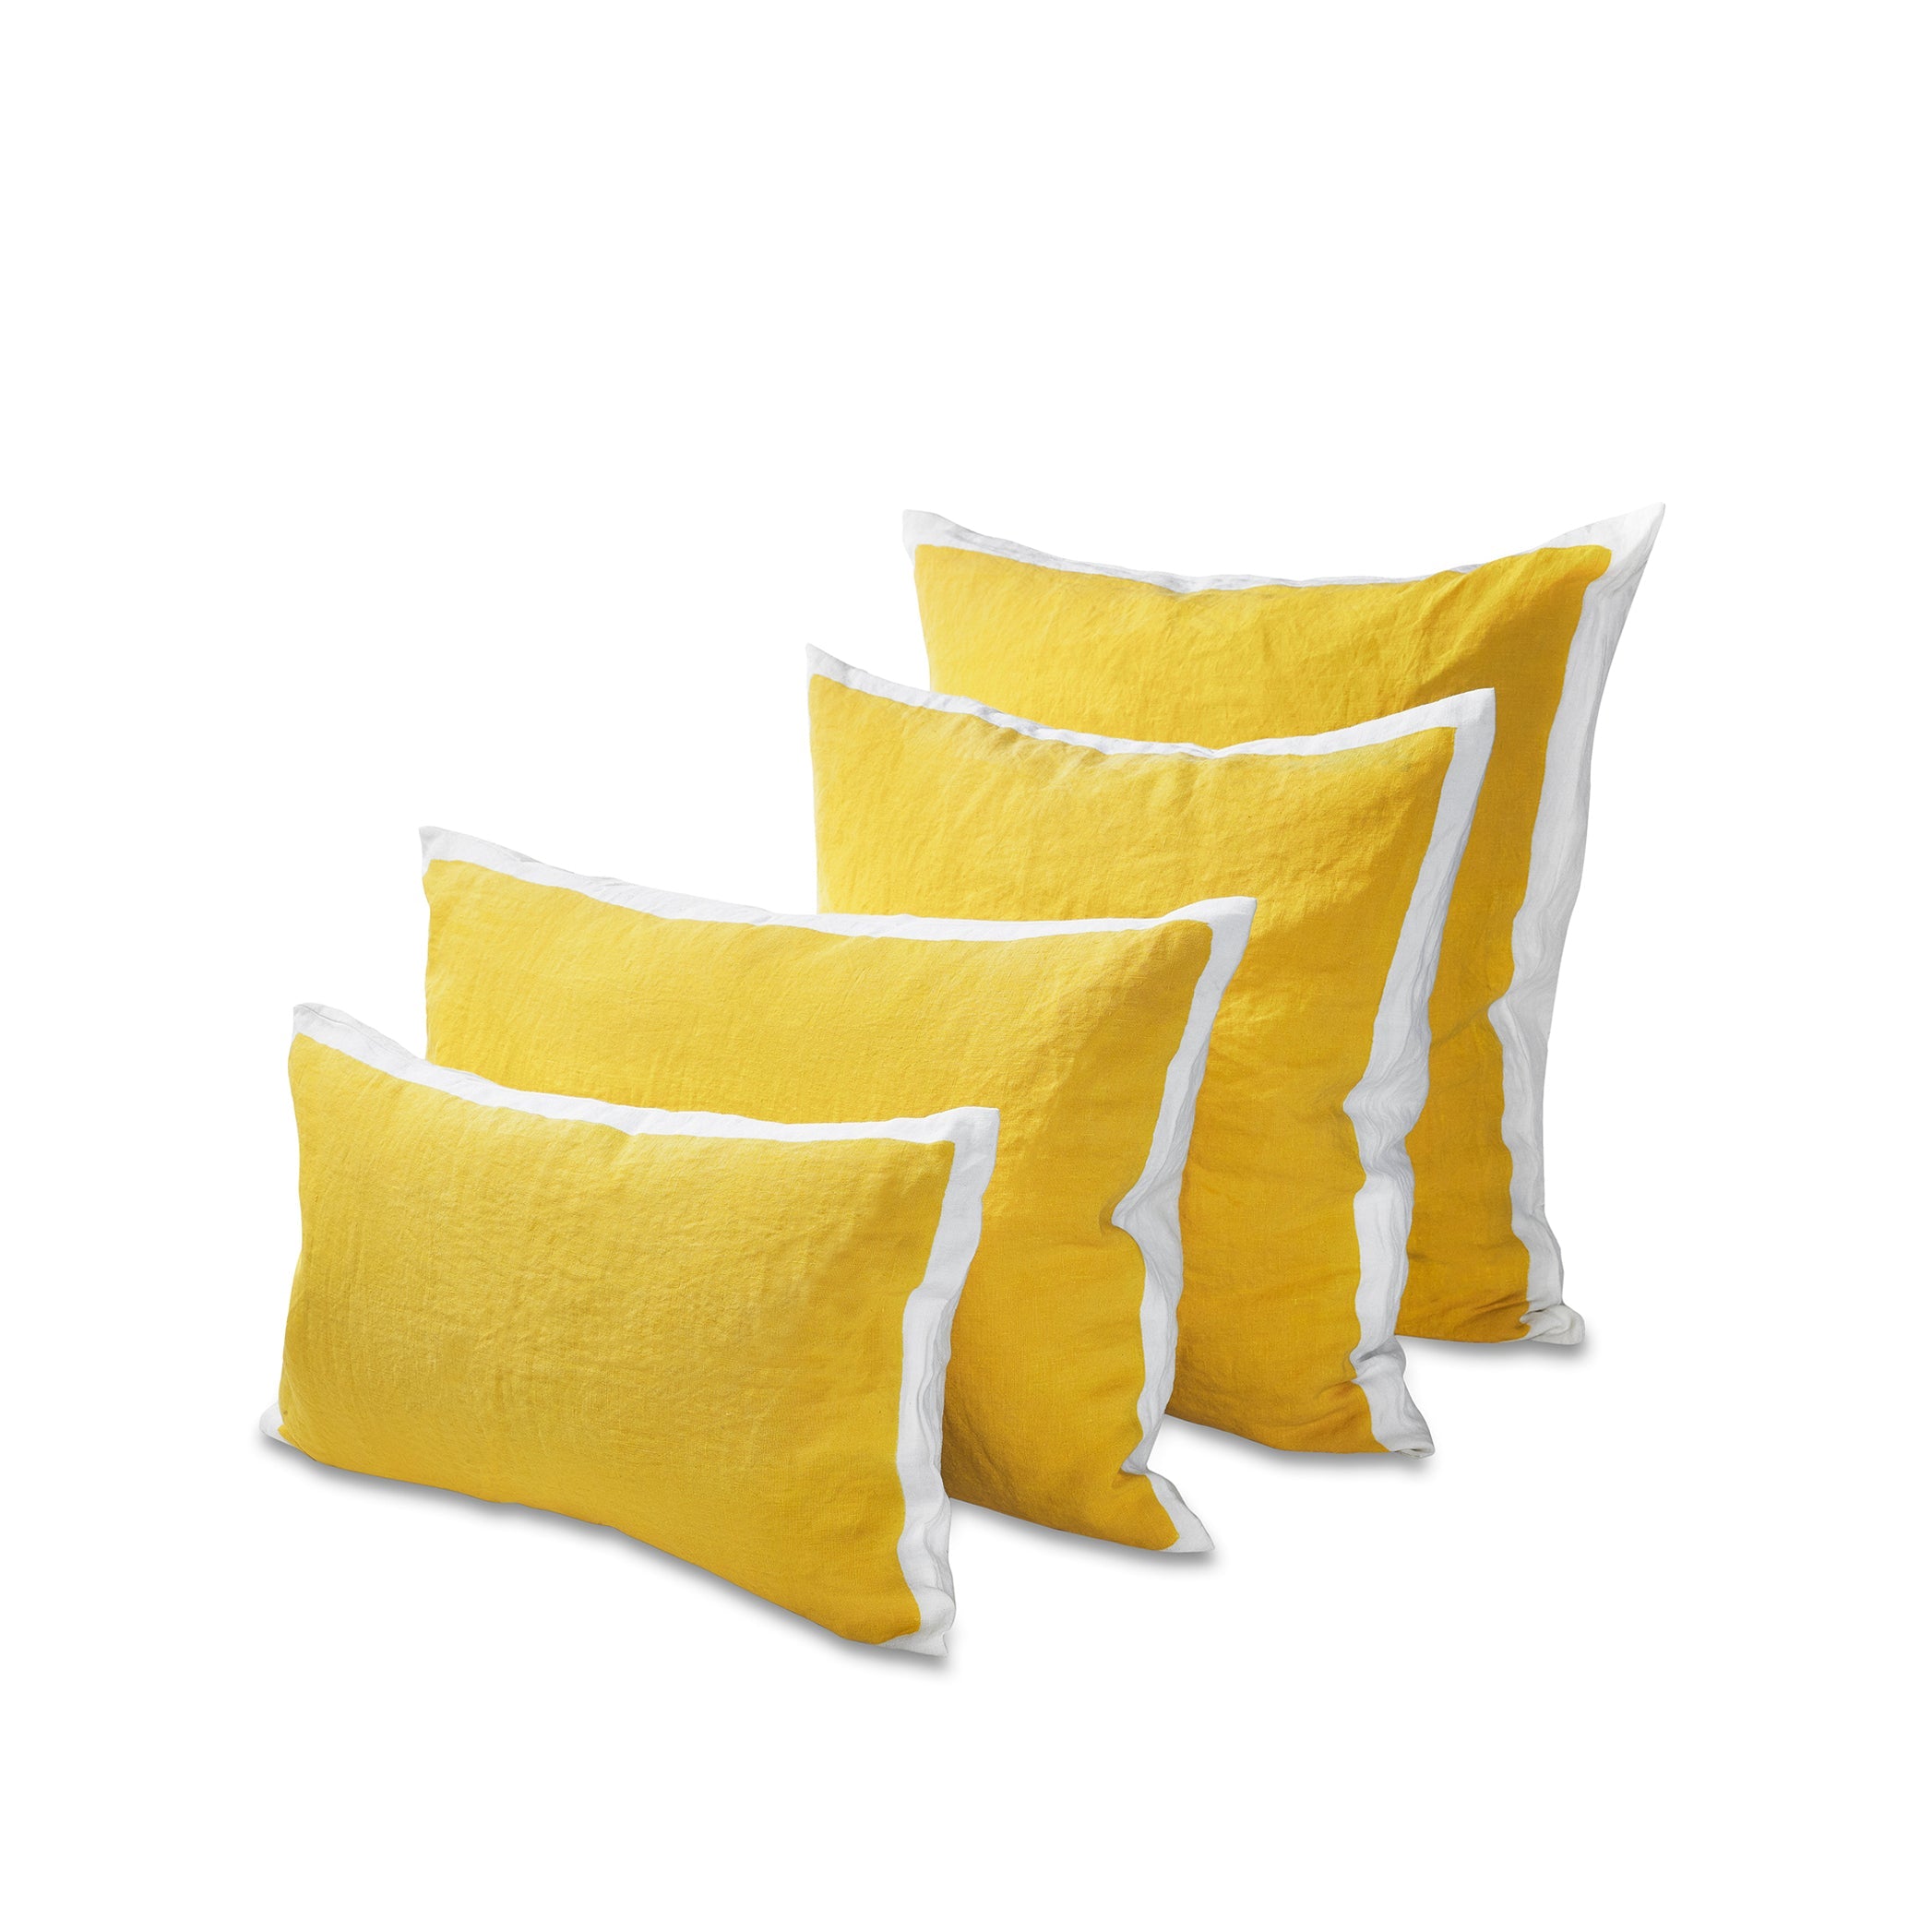 Hand Painted Linen Cushion in Lemon Yellow, 60cm x 40cm